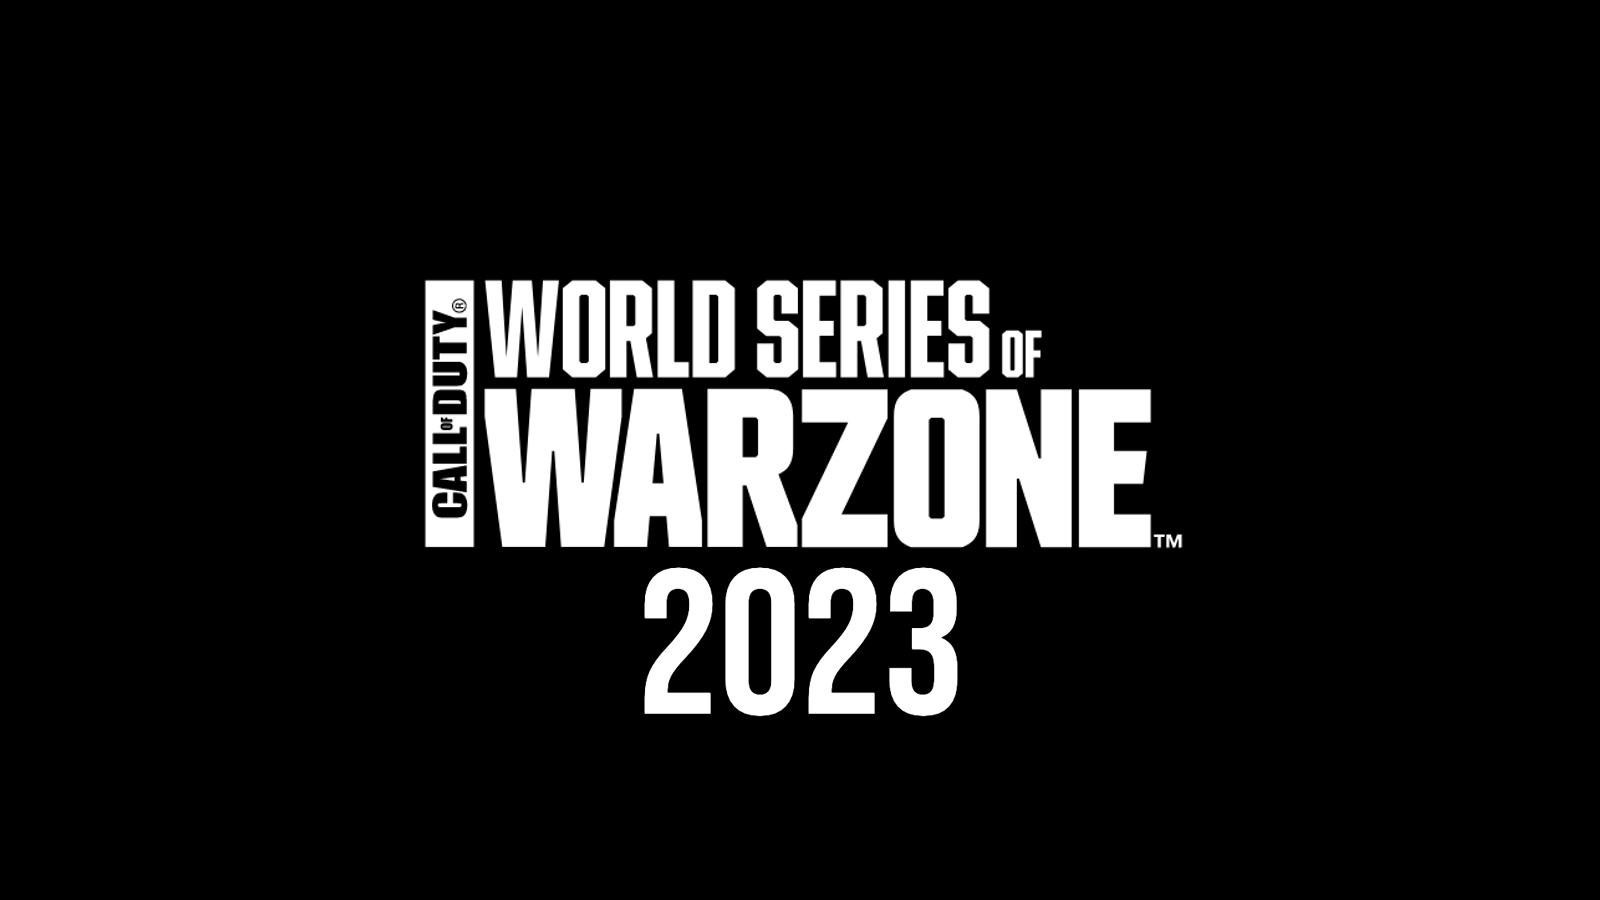 World Series of Warzone 2023 Global Finals: Stream, schedule